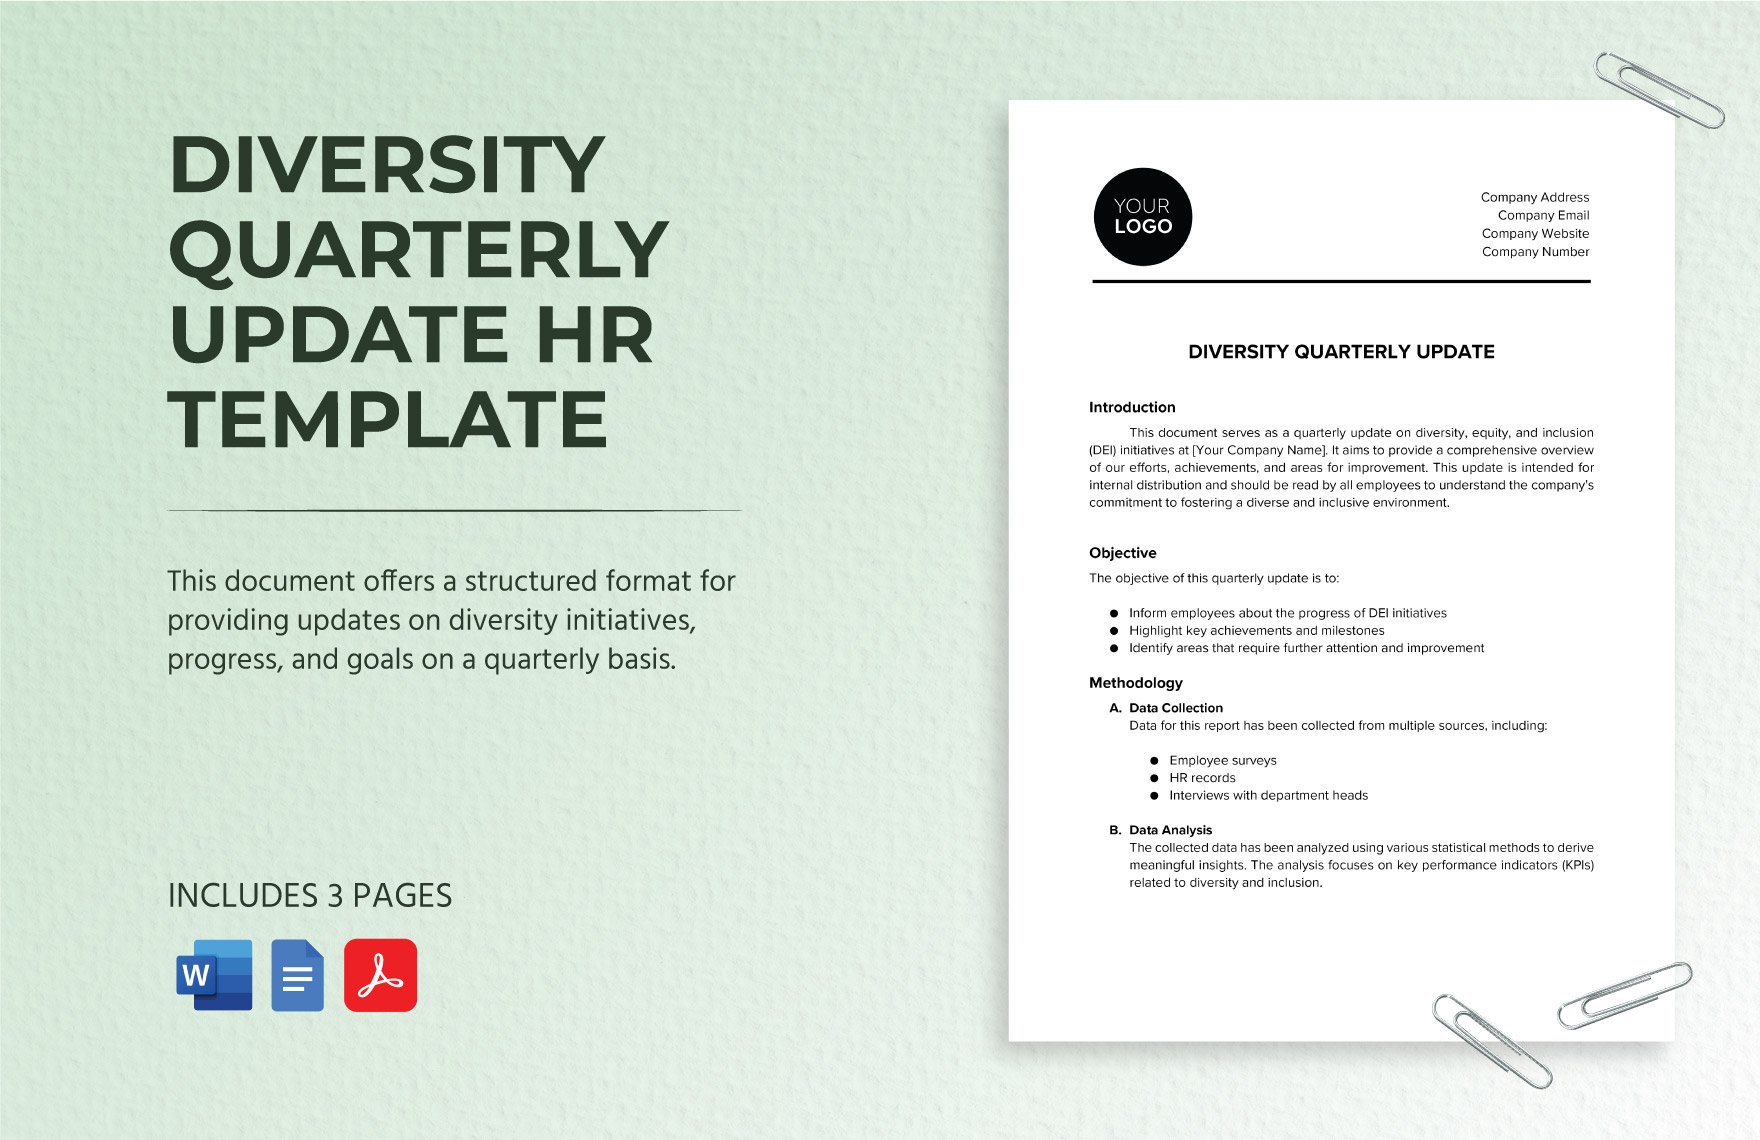 Diversity Quarterly Update HR Template in Word, Google Docs, PDF